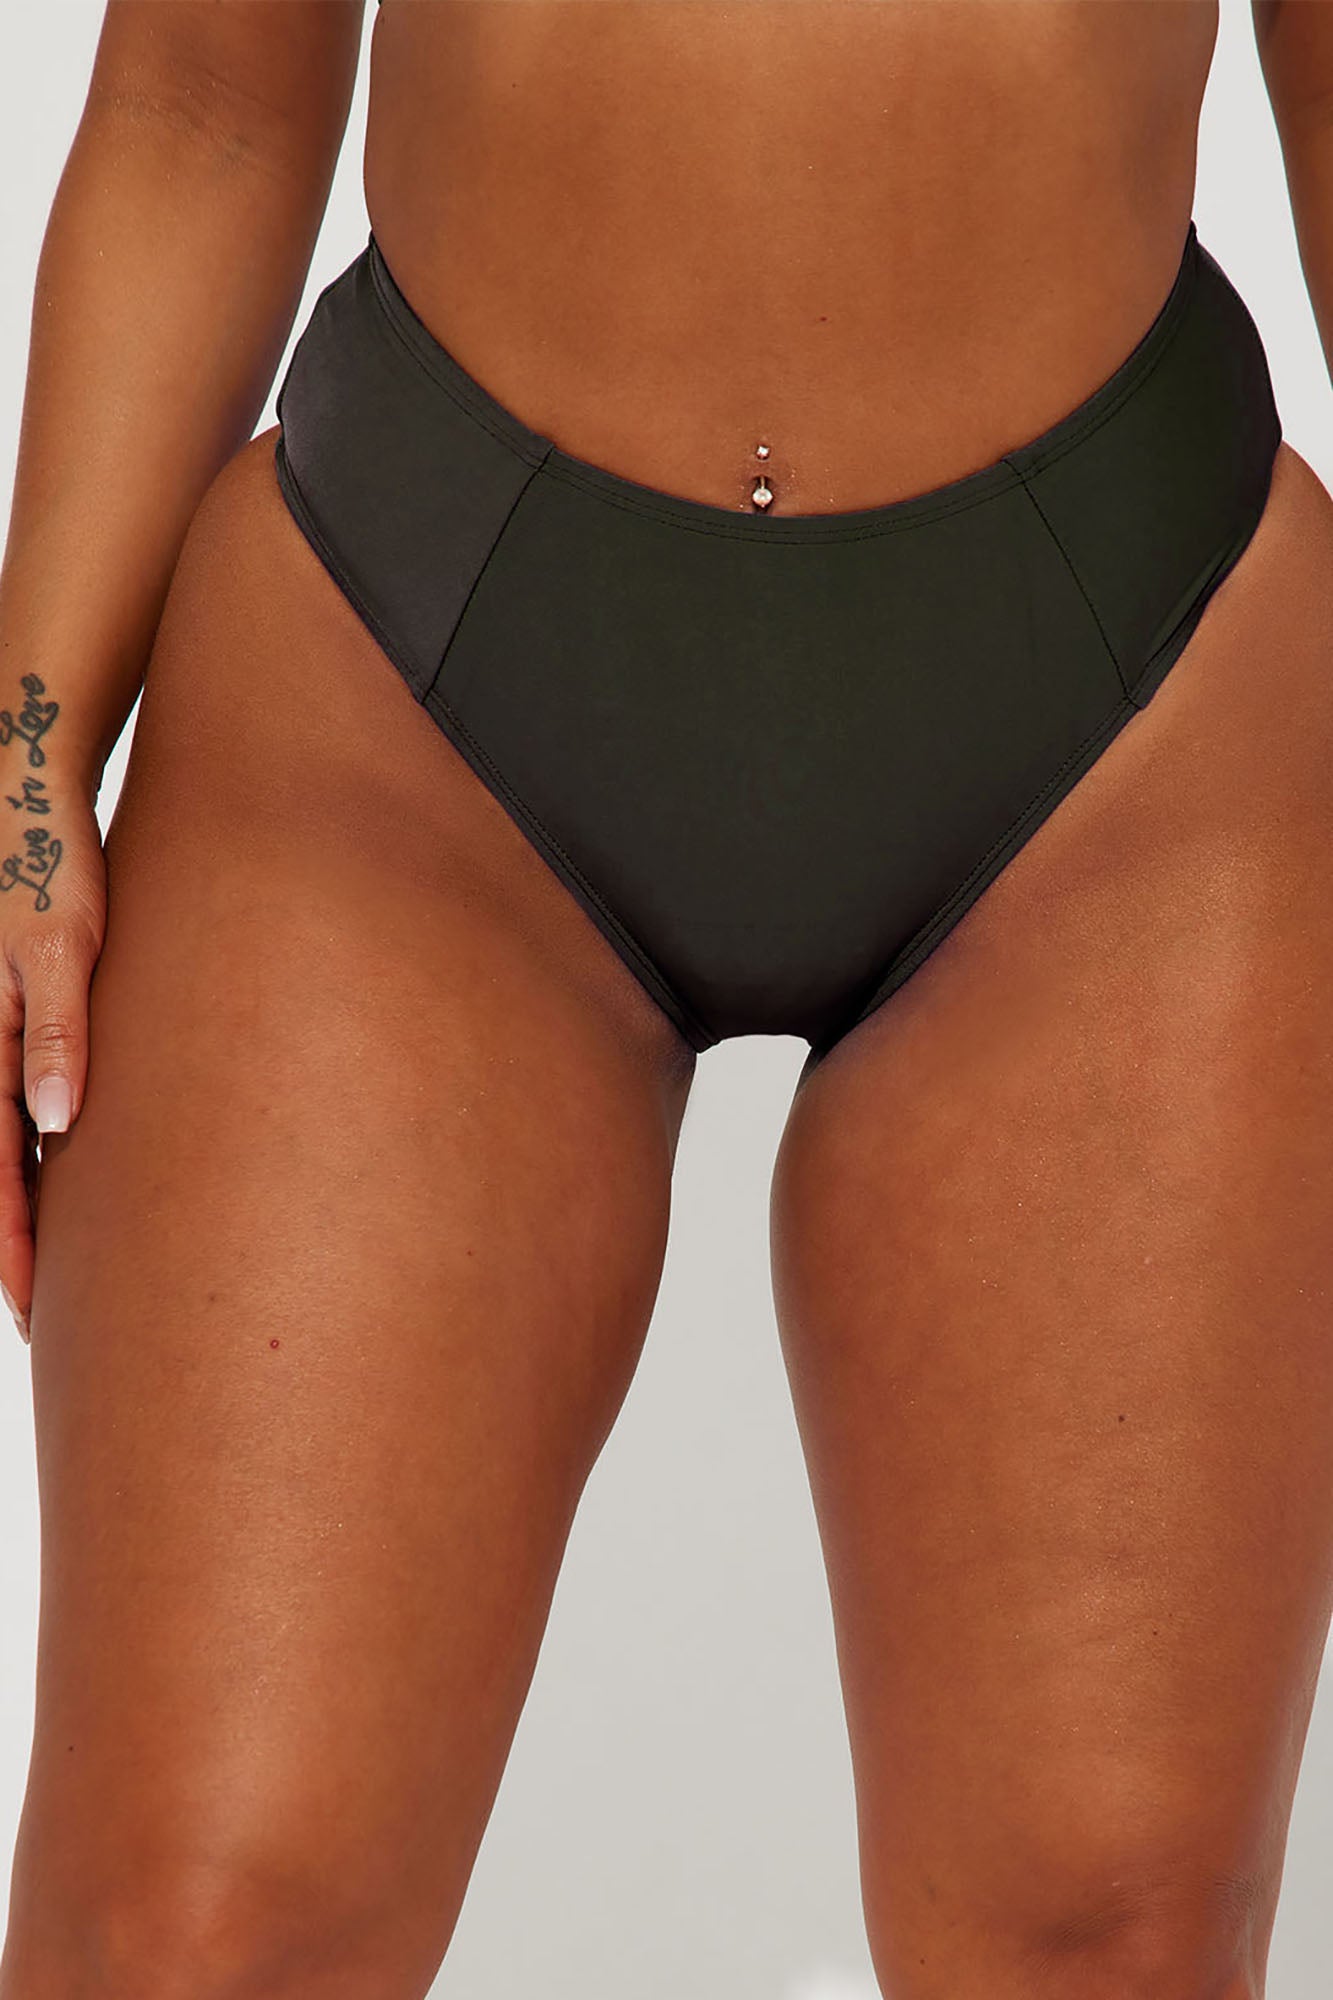 Aruba Mix And Match Brazilian Bikini Bottom - Olive, Fashion Nova, Swimwear